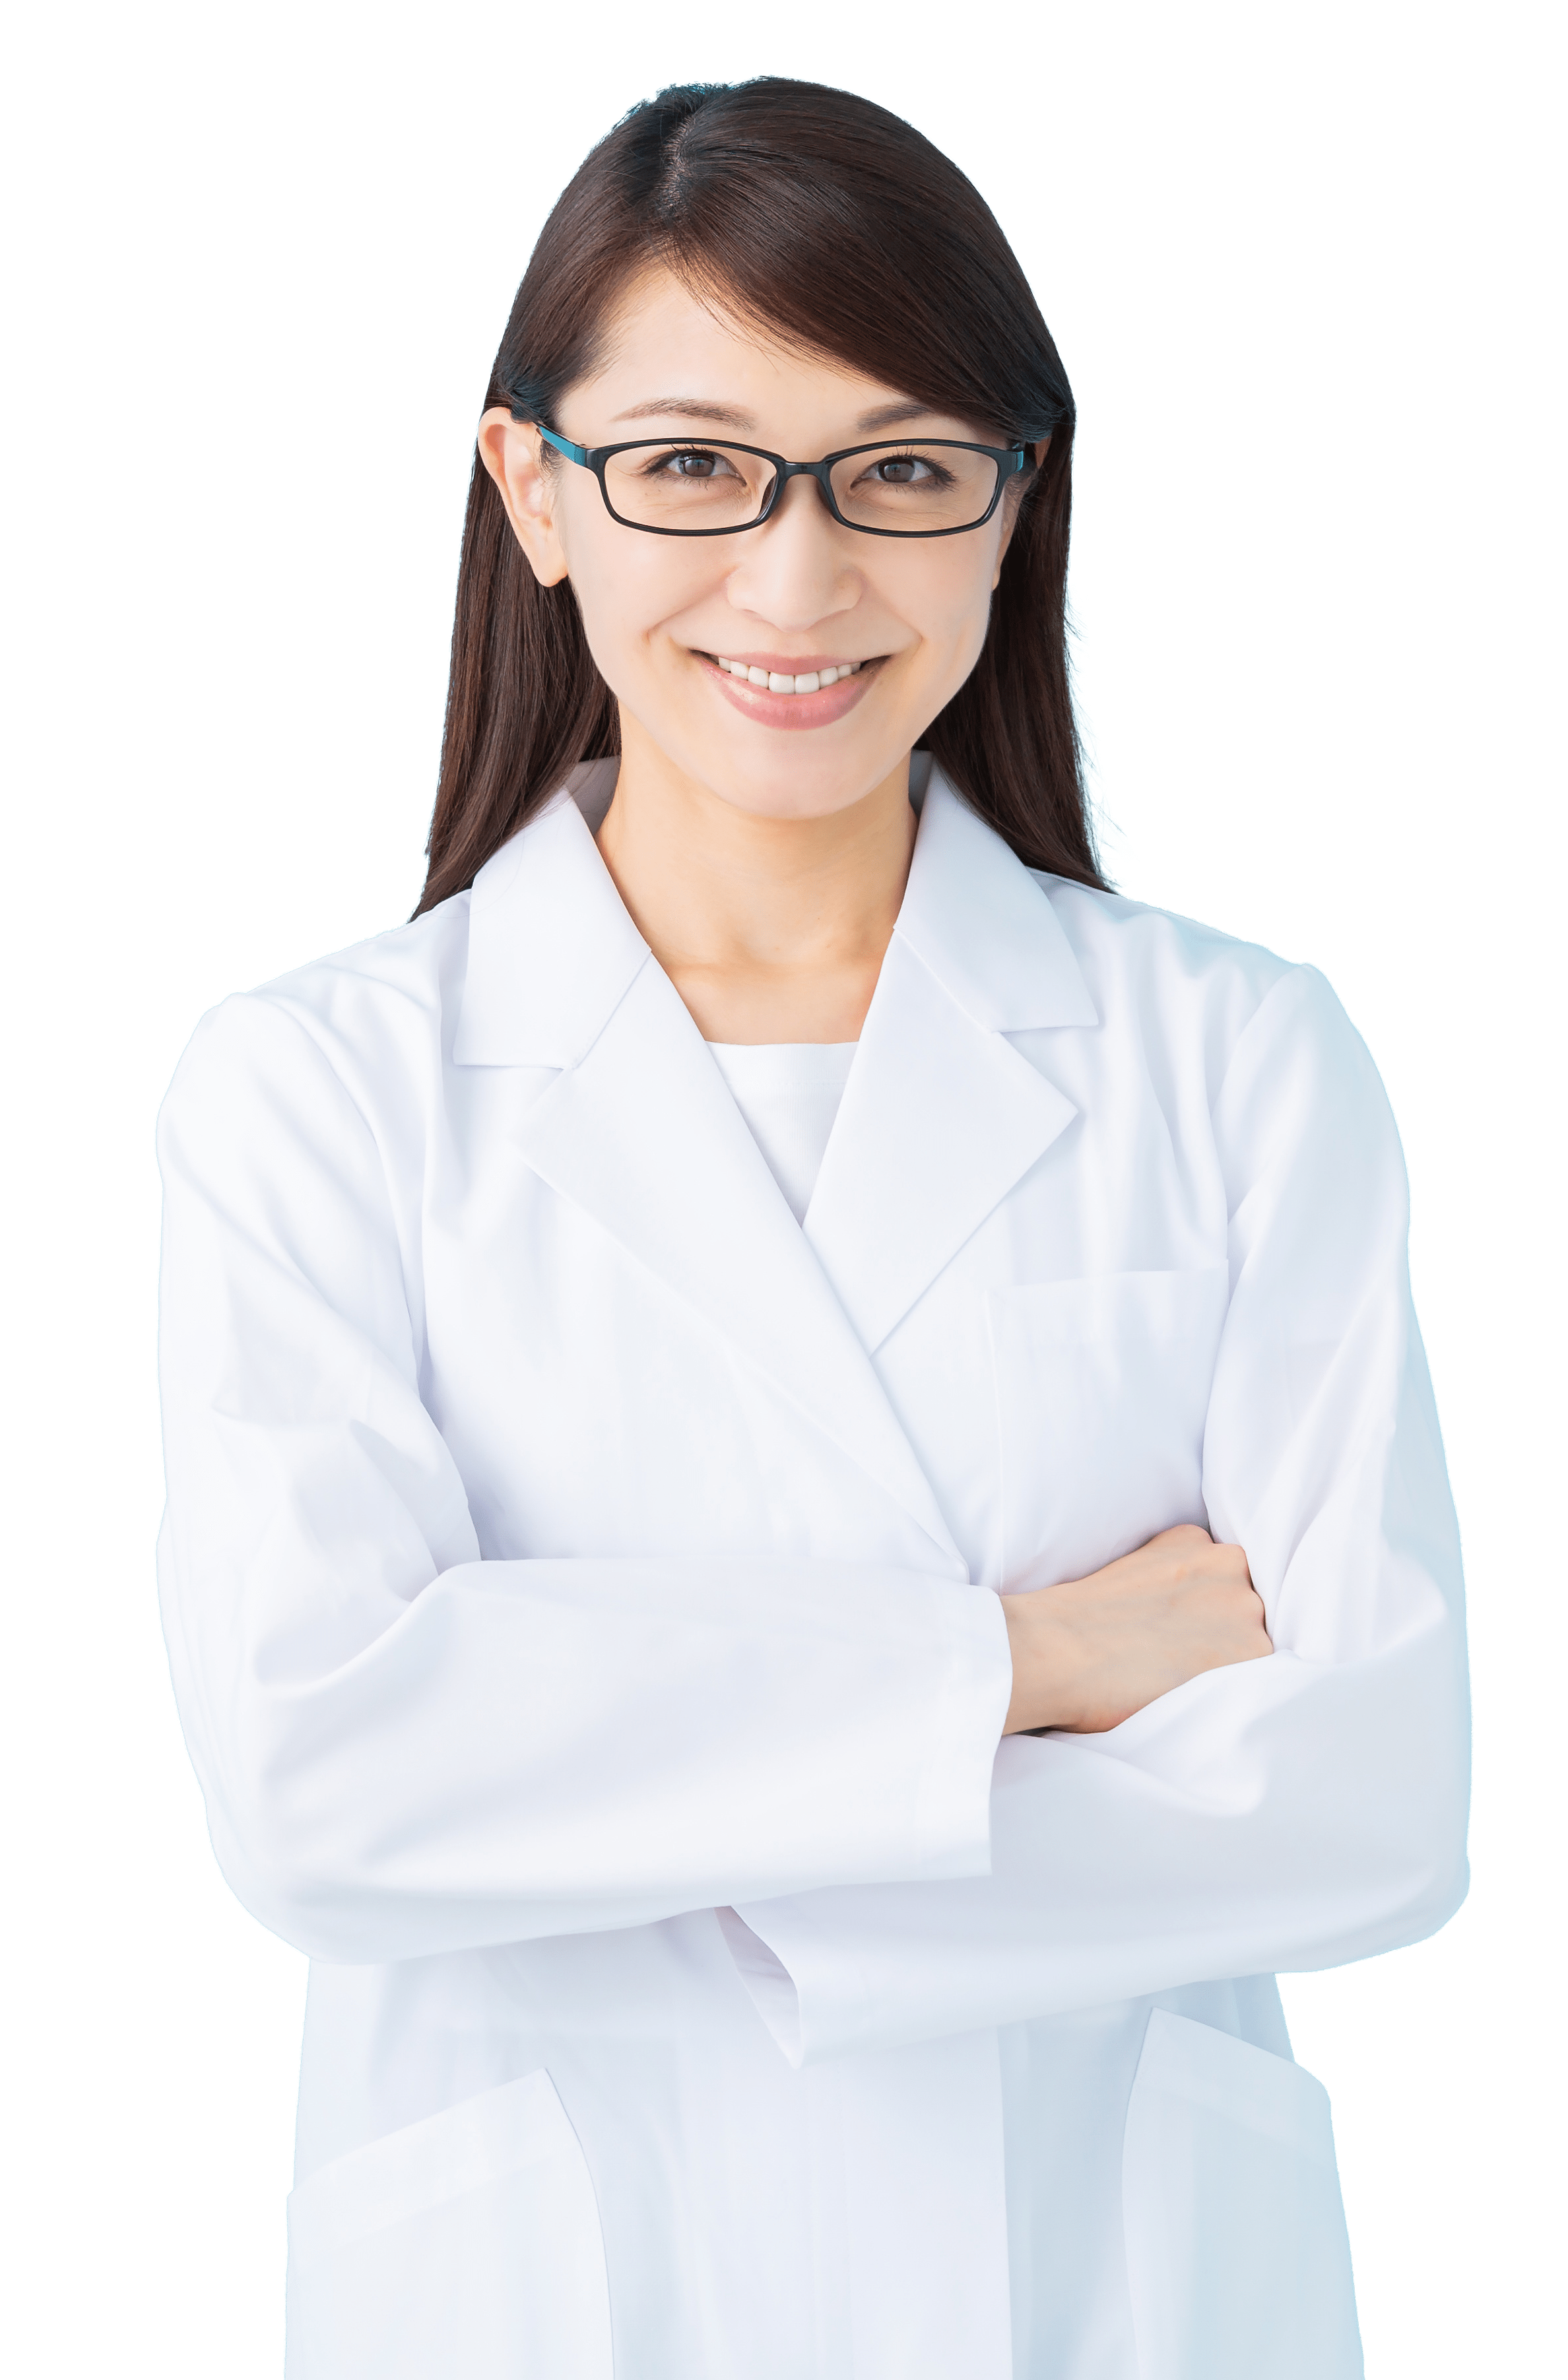 AdobeStock_230913407 - asian type woman doctor in white coat, smiling